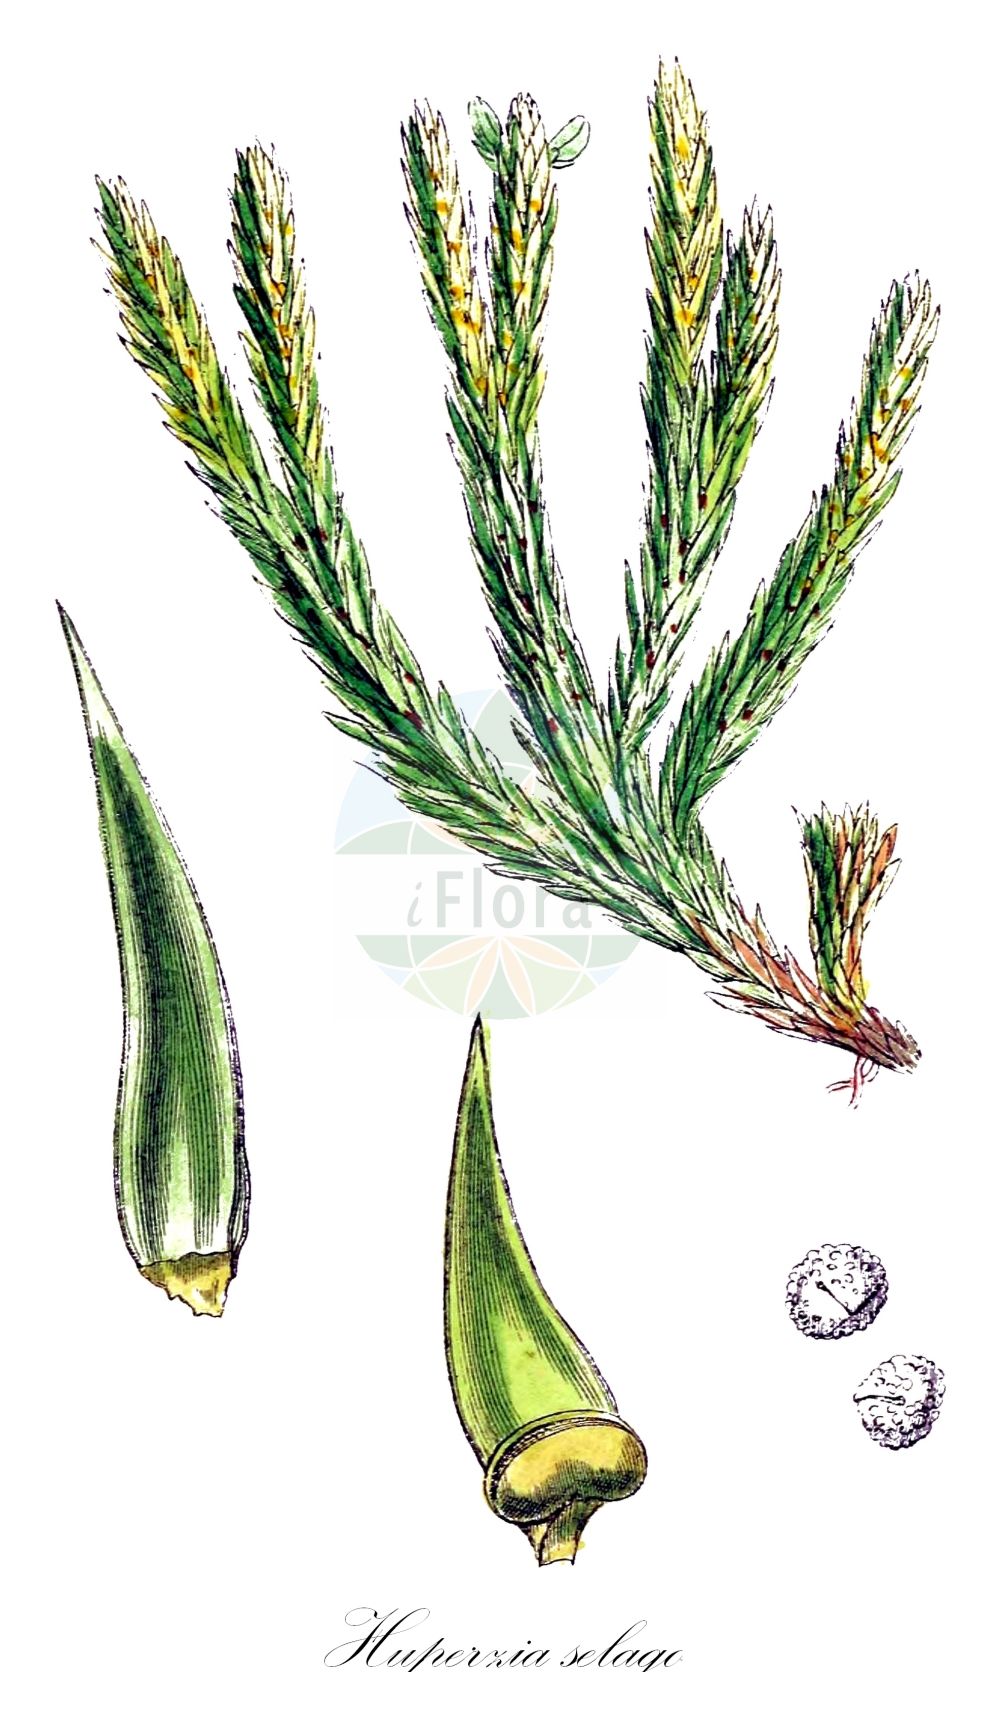 Historische Abbildung von Huperzia selago (Tannen-Bärlapp - Fir Clubmoss). Das Bild zeigt Blatt, Bluete, Frucht und Same. ---- Historical Drawing of Huperzia selago (Tannen-Bärlapp - Fir Clubmoss). The image is showing leaf, flower, fruit and seed.(Huperzia selago,Tannen-Bärlapp,Fir Clubmoss,Huperzia petrovii,Huperzia selago,Lycopodium selago,Tannen-Baerlapp,Tangelkraut,Tannen-Teufelsklaue,Fir Clubmoss,Huperzia,Teufelsklaue,Clubmoss,Lycopodiaceae,Bärlappgewächse,Clubmoss family,Blatt,Bluete,Frucht,Same,leaf,flower,fruit,seed,Sowerby (1790-1813))